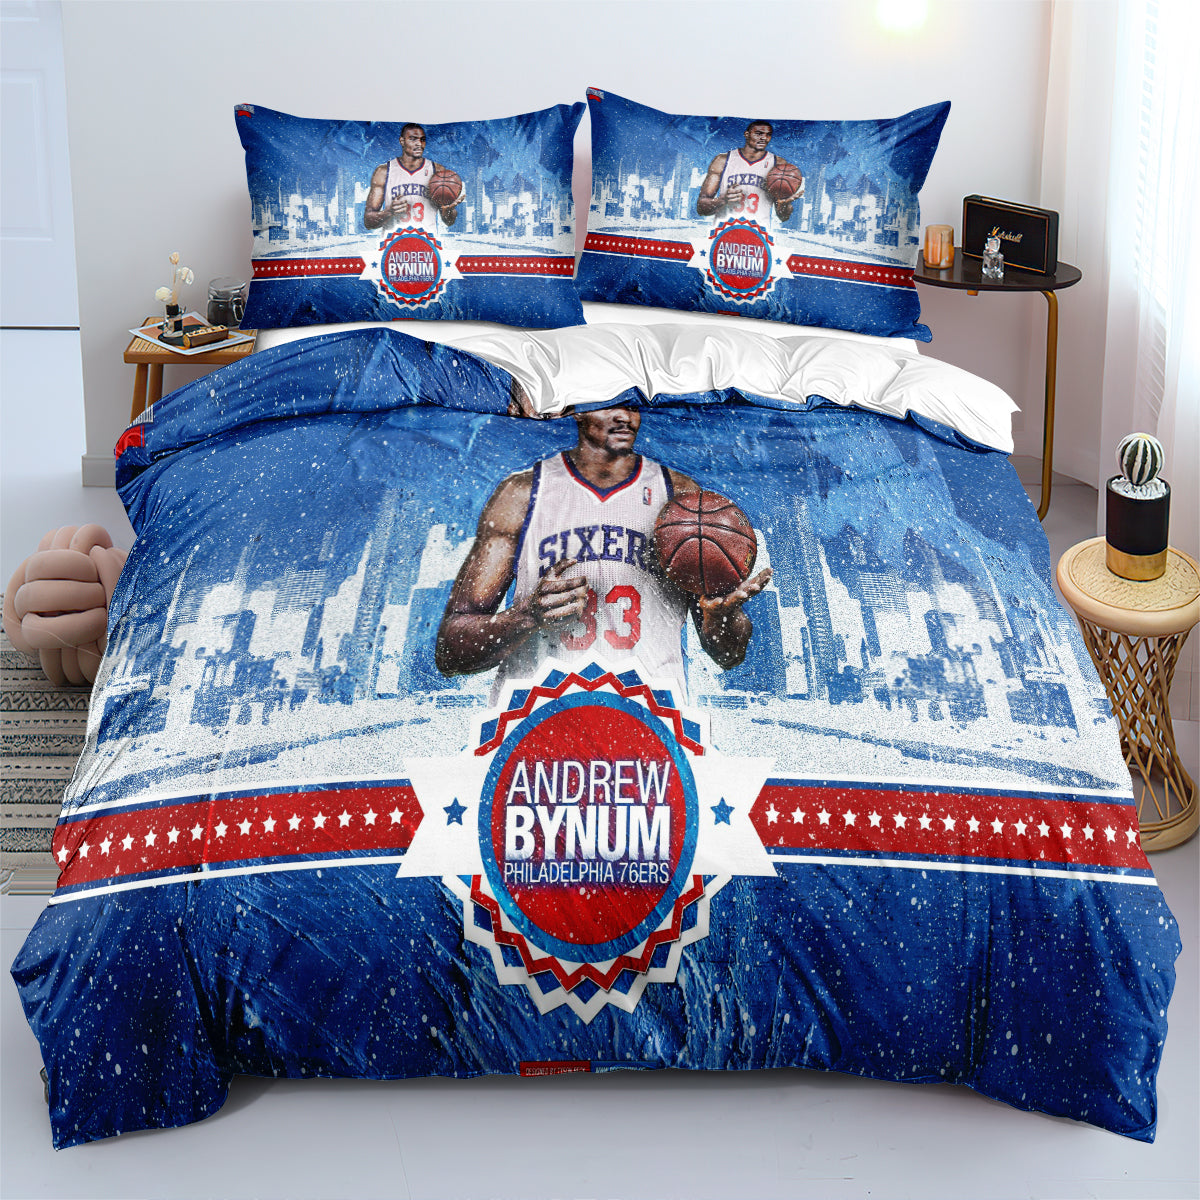 Philadelphia Basketball 76ers Bedding Set Quilt Cover Without Filler